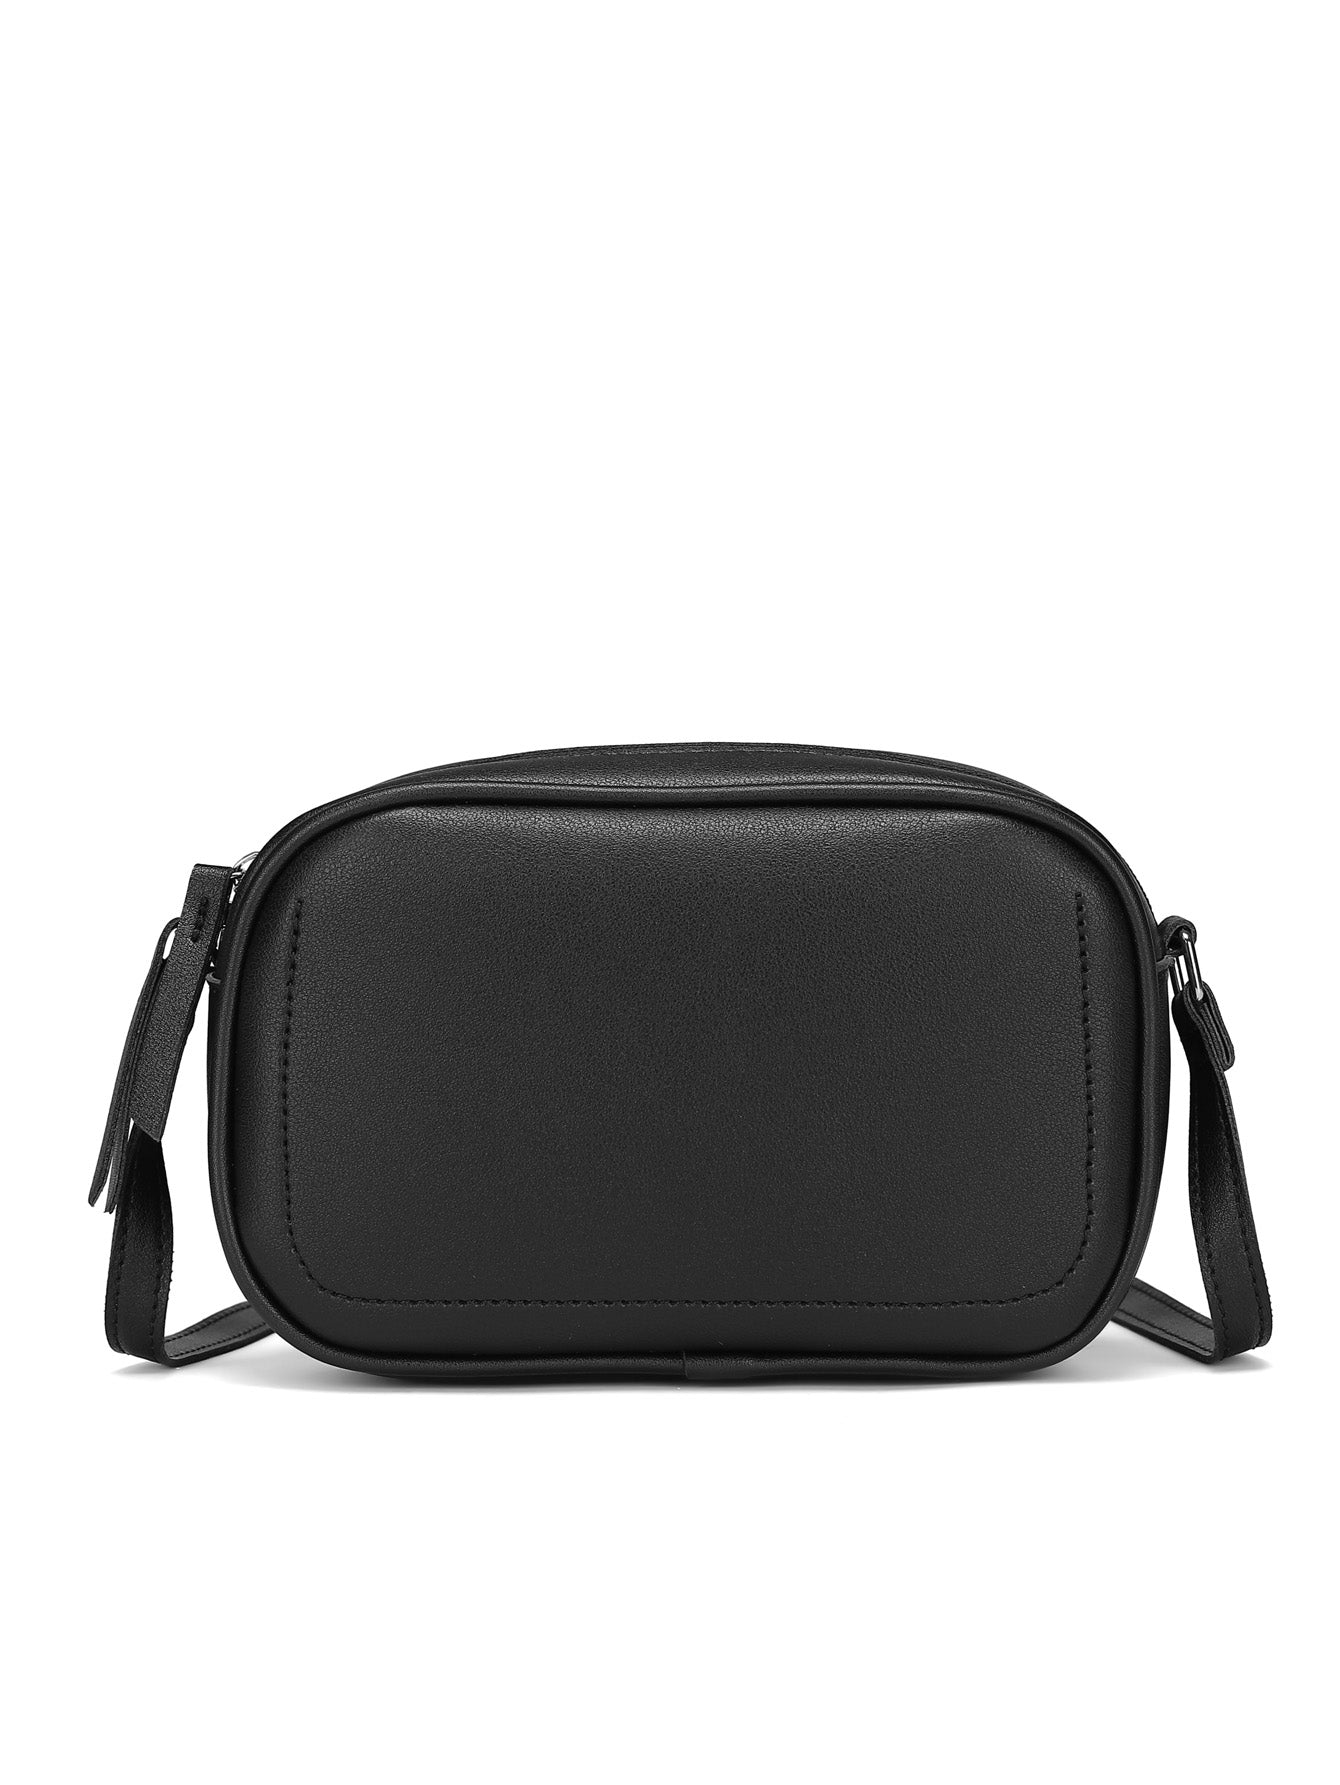 Women Leather Handbags Clutches Women Handbags Ladies Shoulder Bags Crossbody Bags Sai Feel